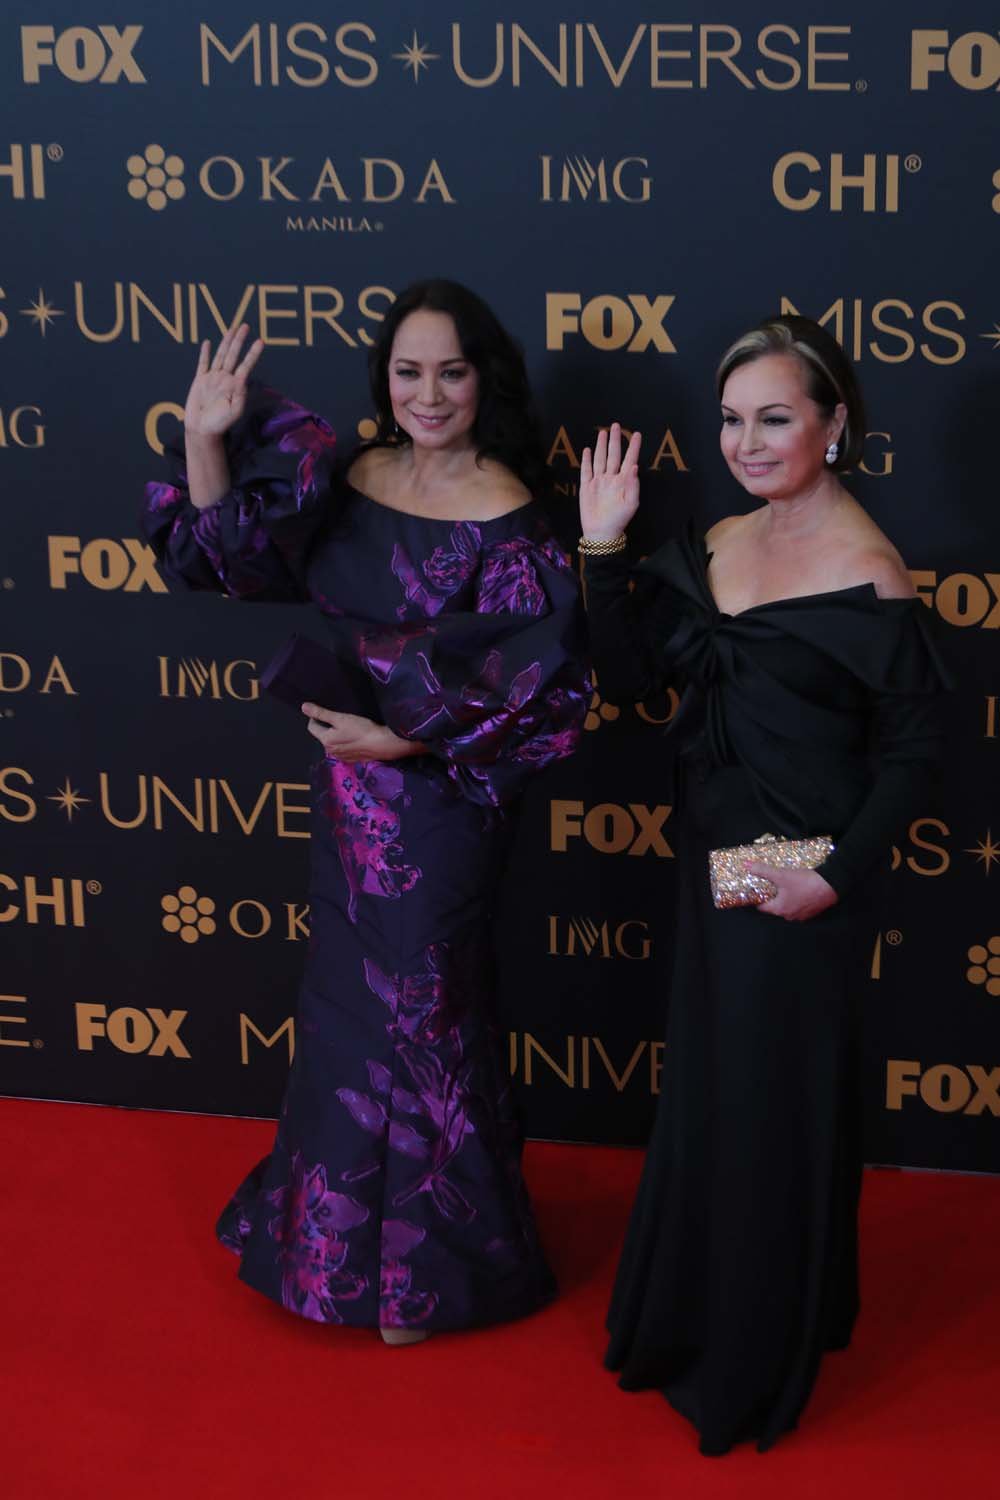 Former Miss Universe Gloria Diaz and Margie Moran at the Miss U Red Carpet event